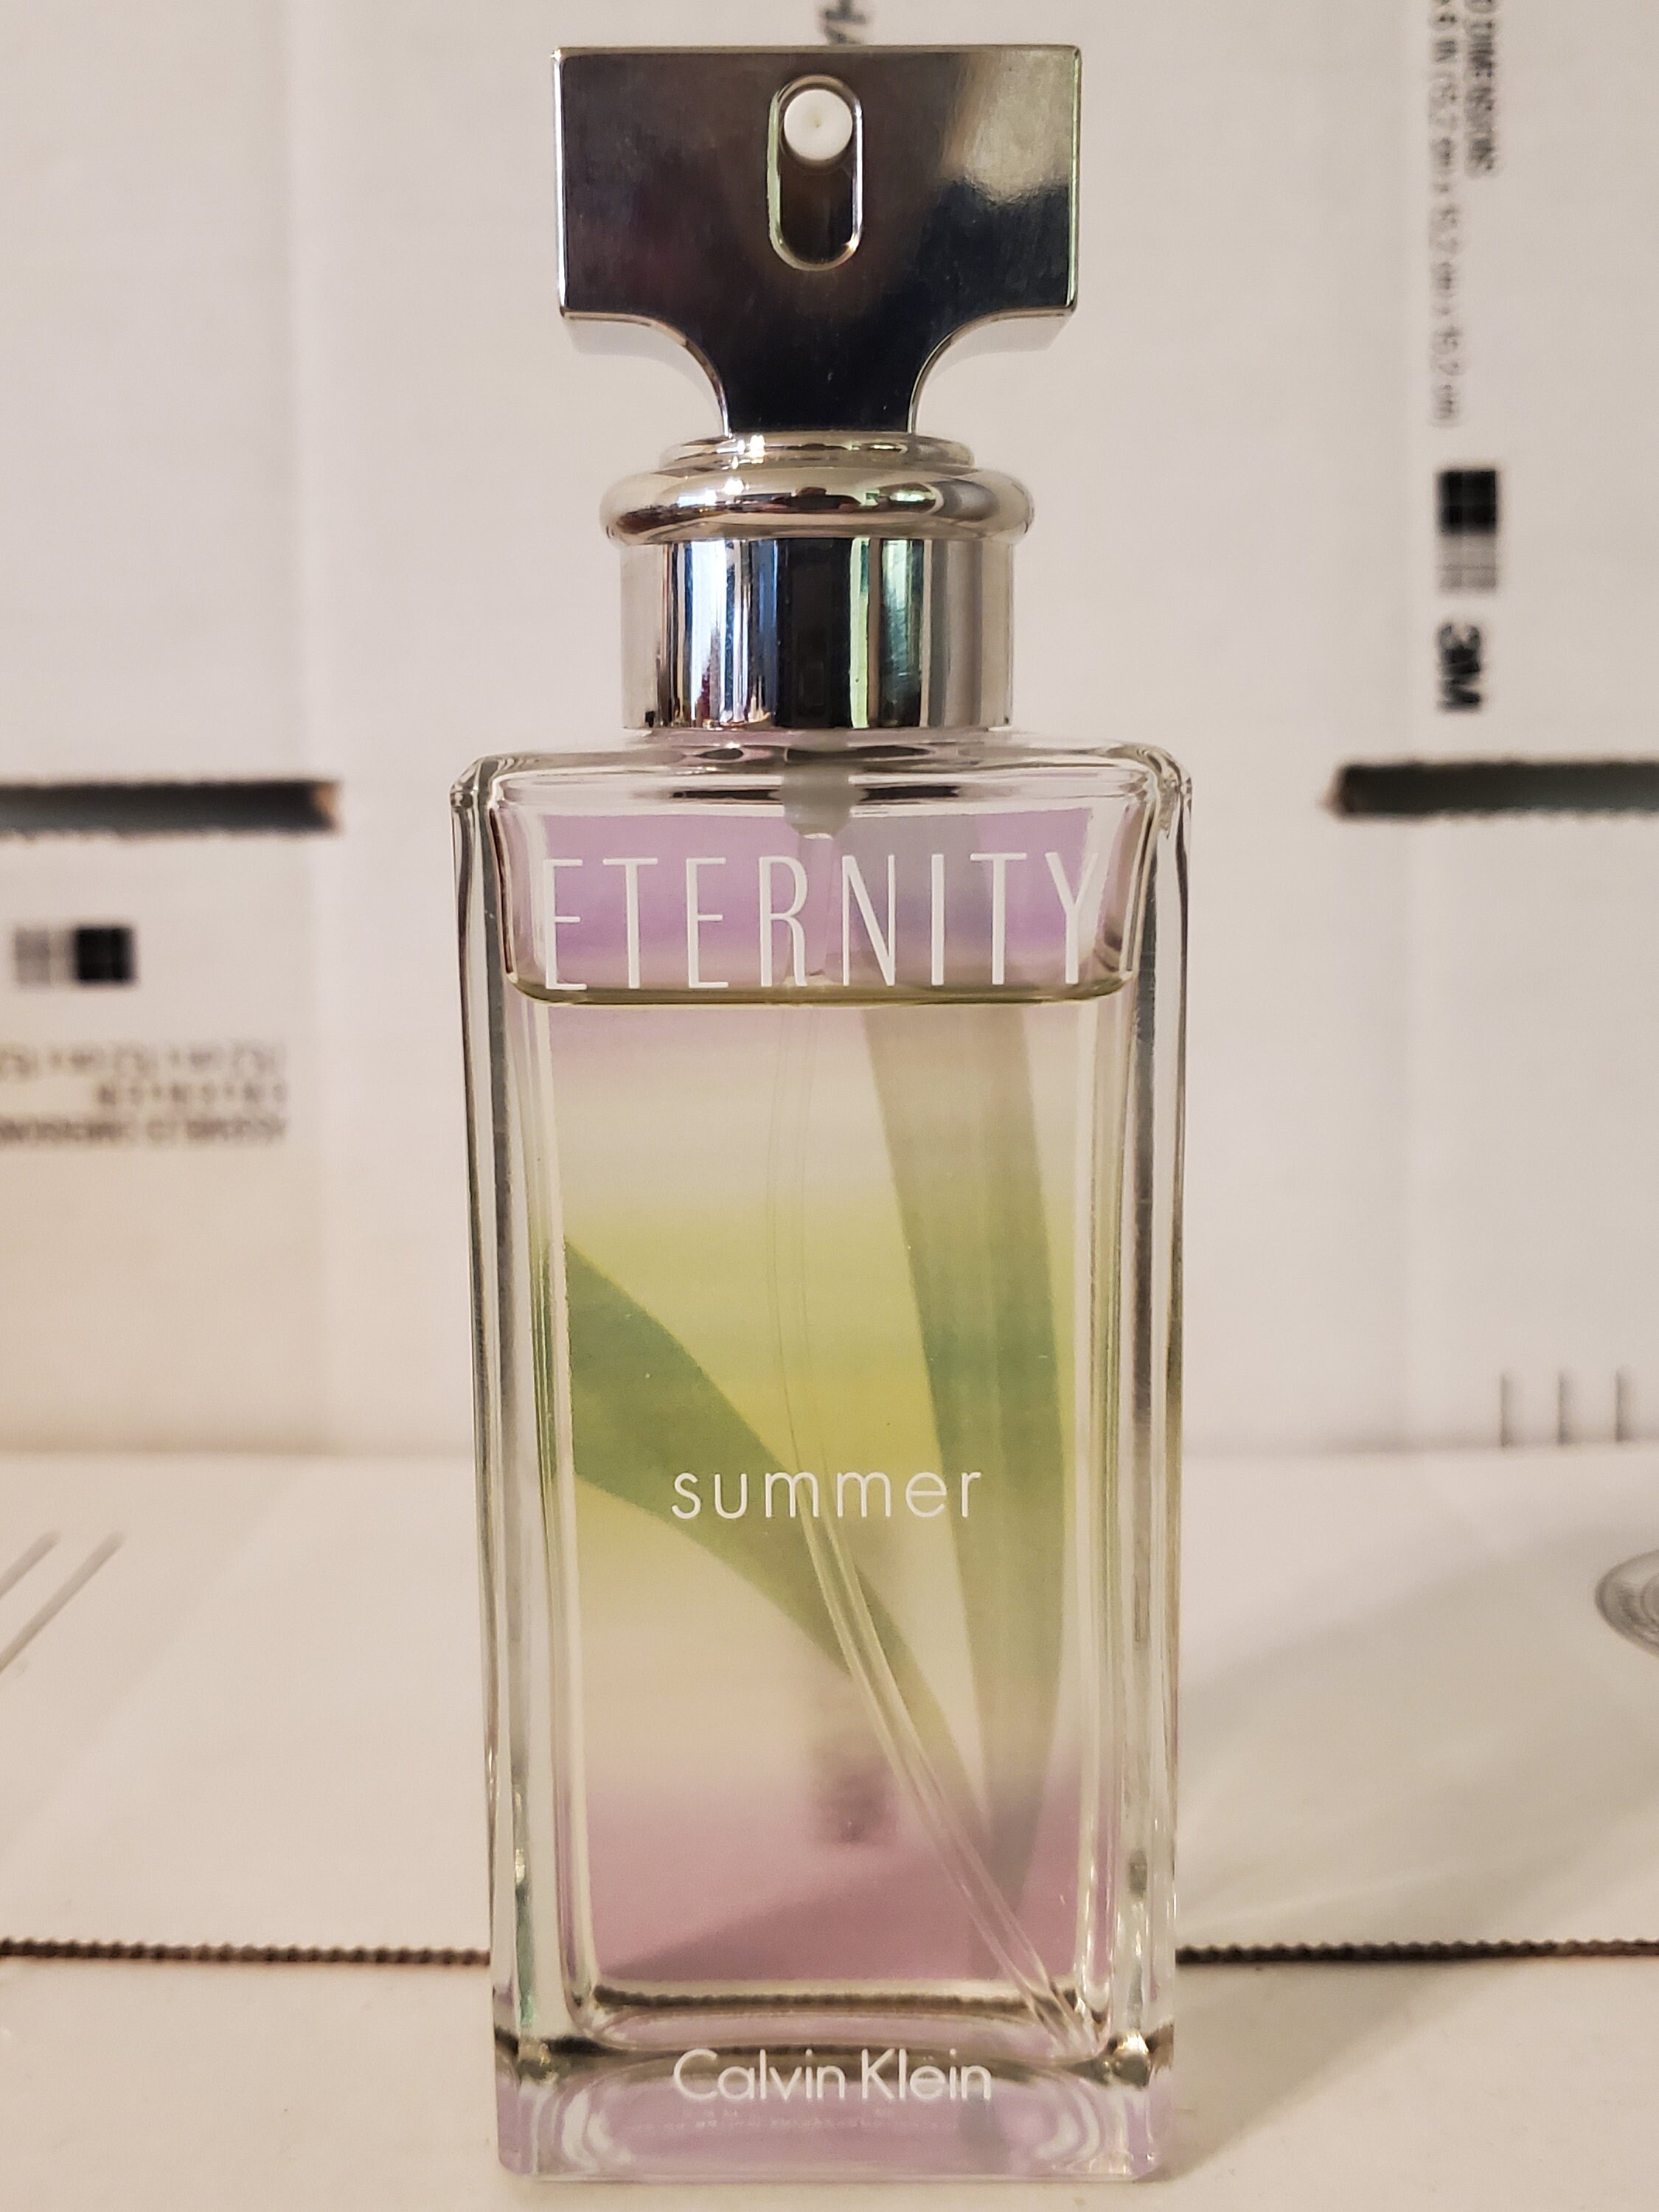 Calvin Klein ETERNITY SUMMER Eau De Parfum Spray Unboxed | Etsy